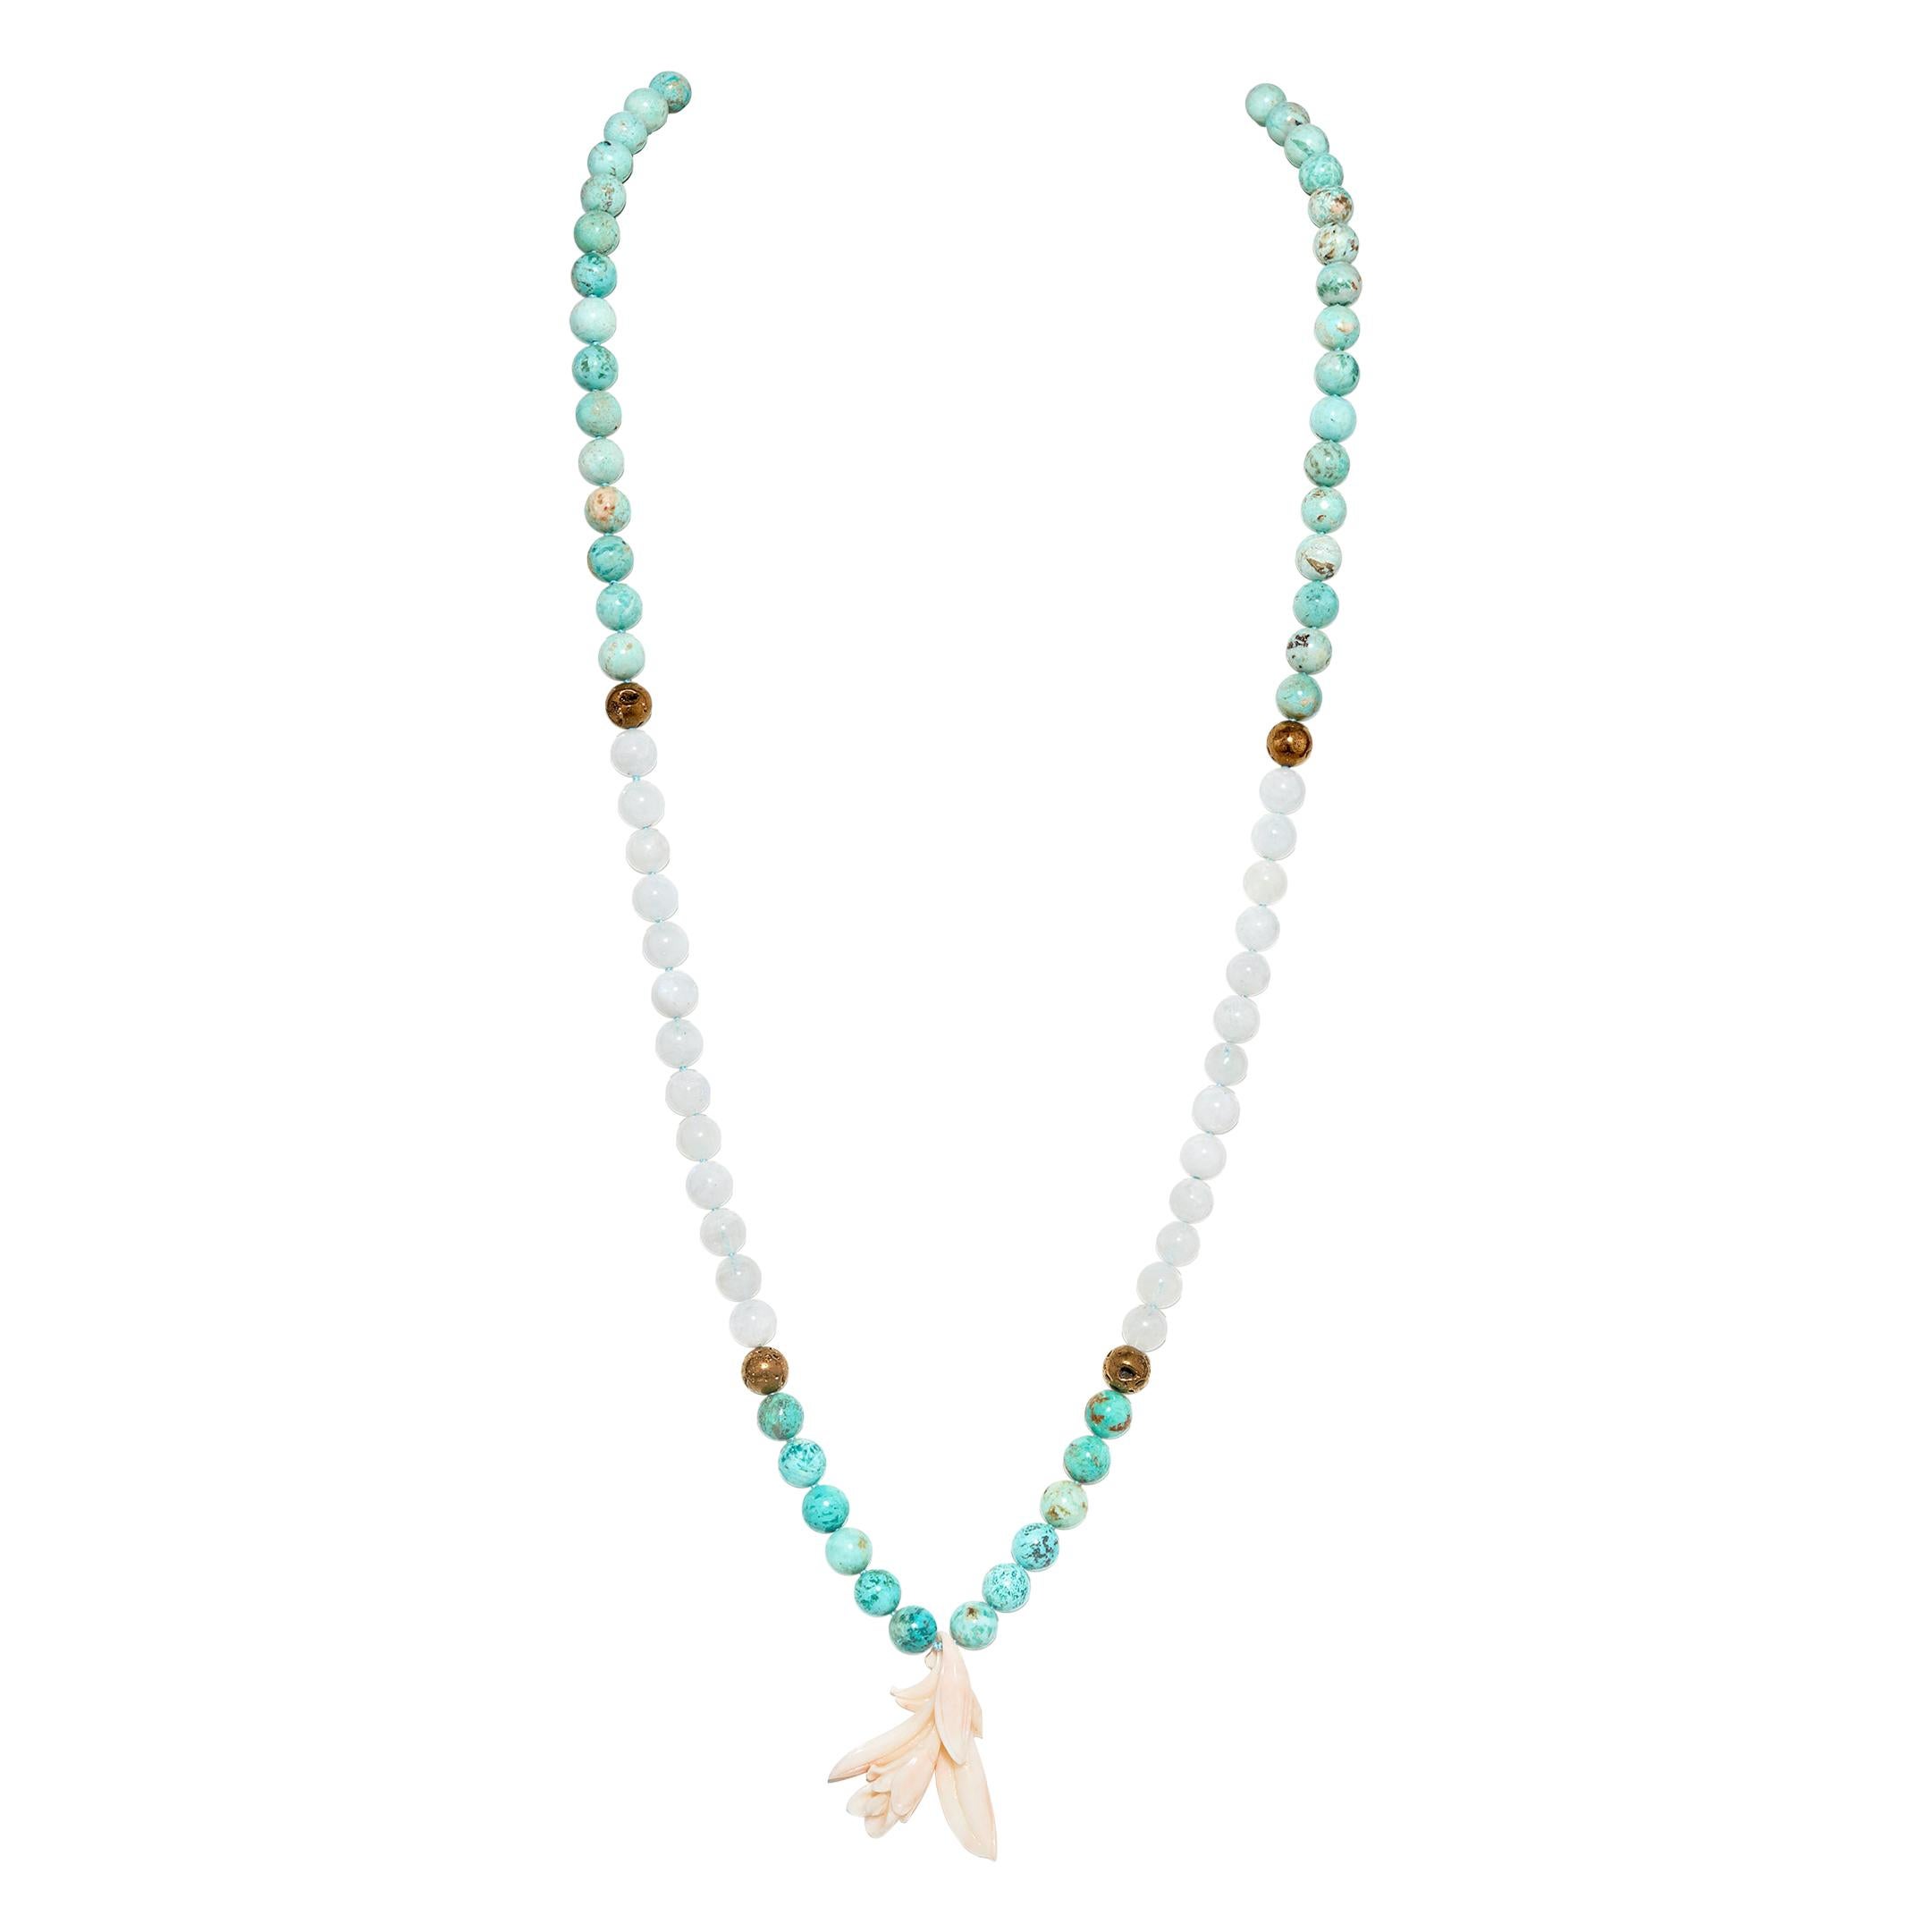 Vintage Coral, Moonstone, Turquoise Mala / Meditation / Prayer Necklace